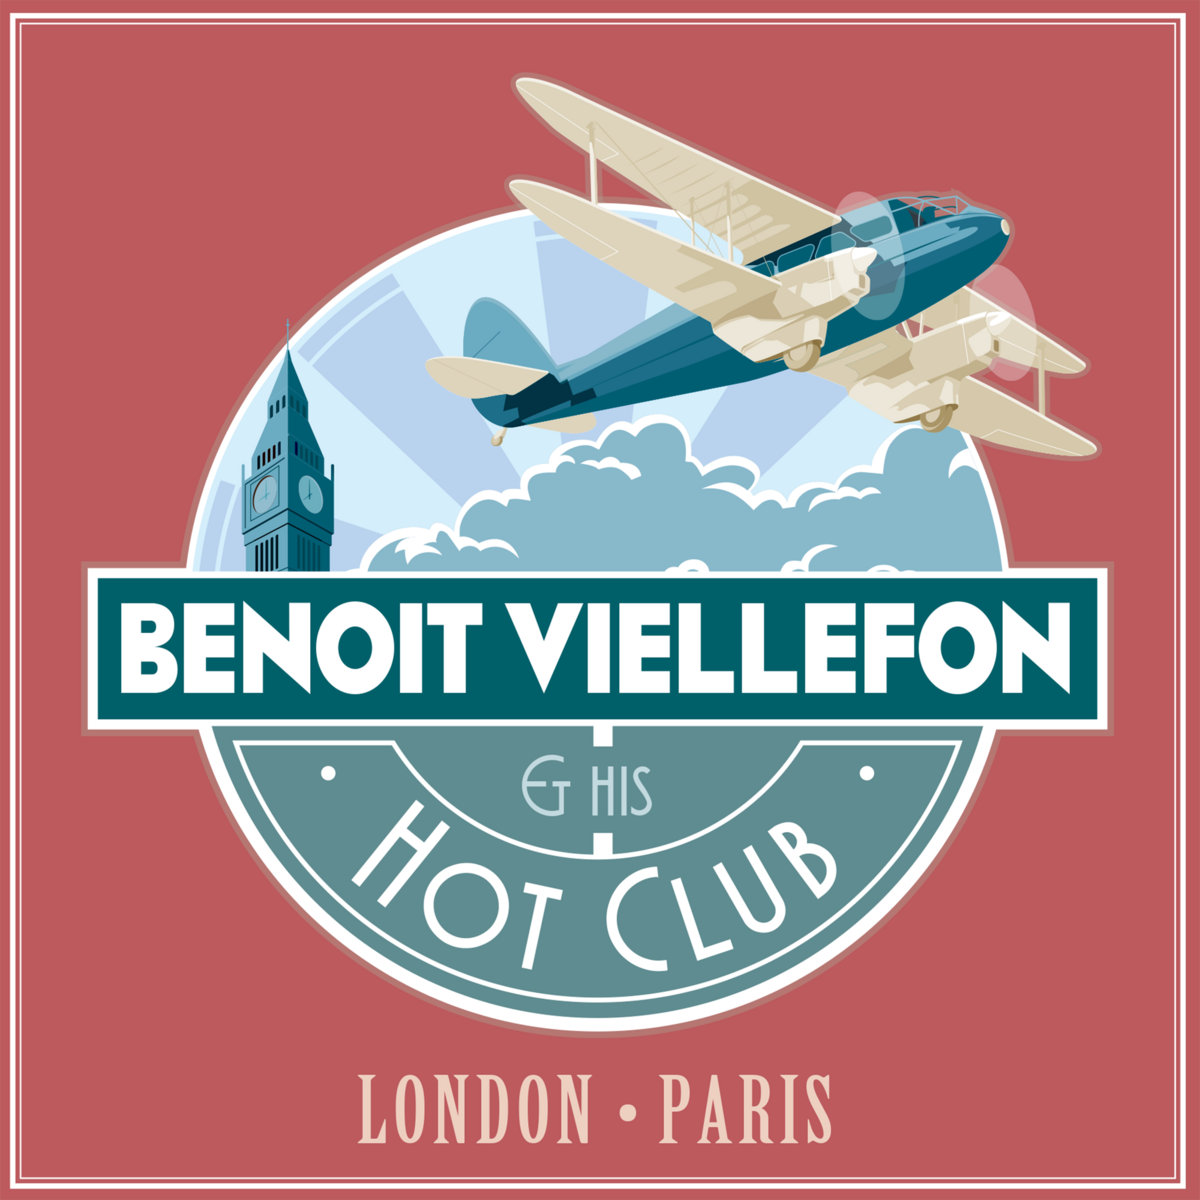 Benoit Viellefon Hot Club - London Paris - Album available on Bandcamp